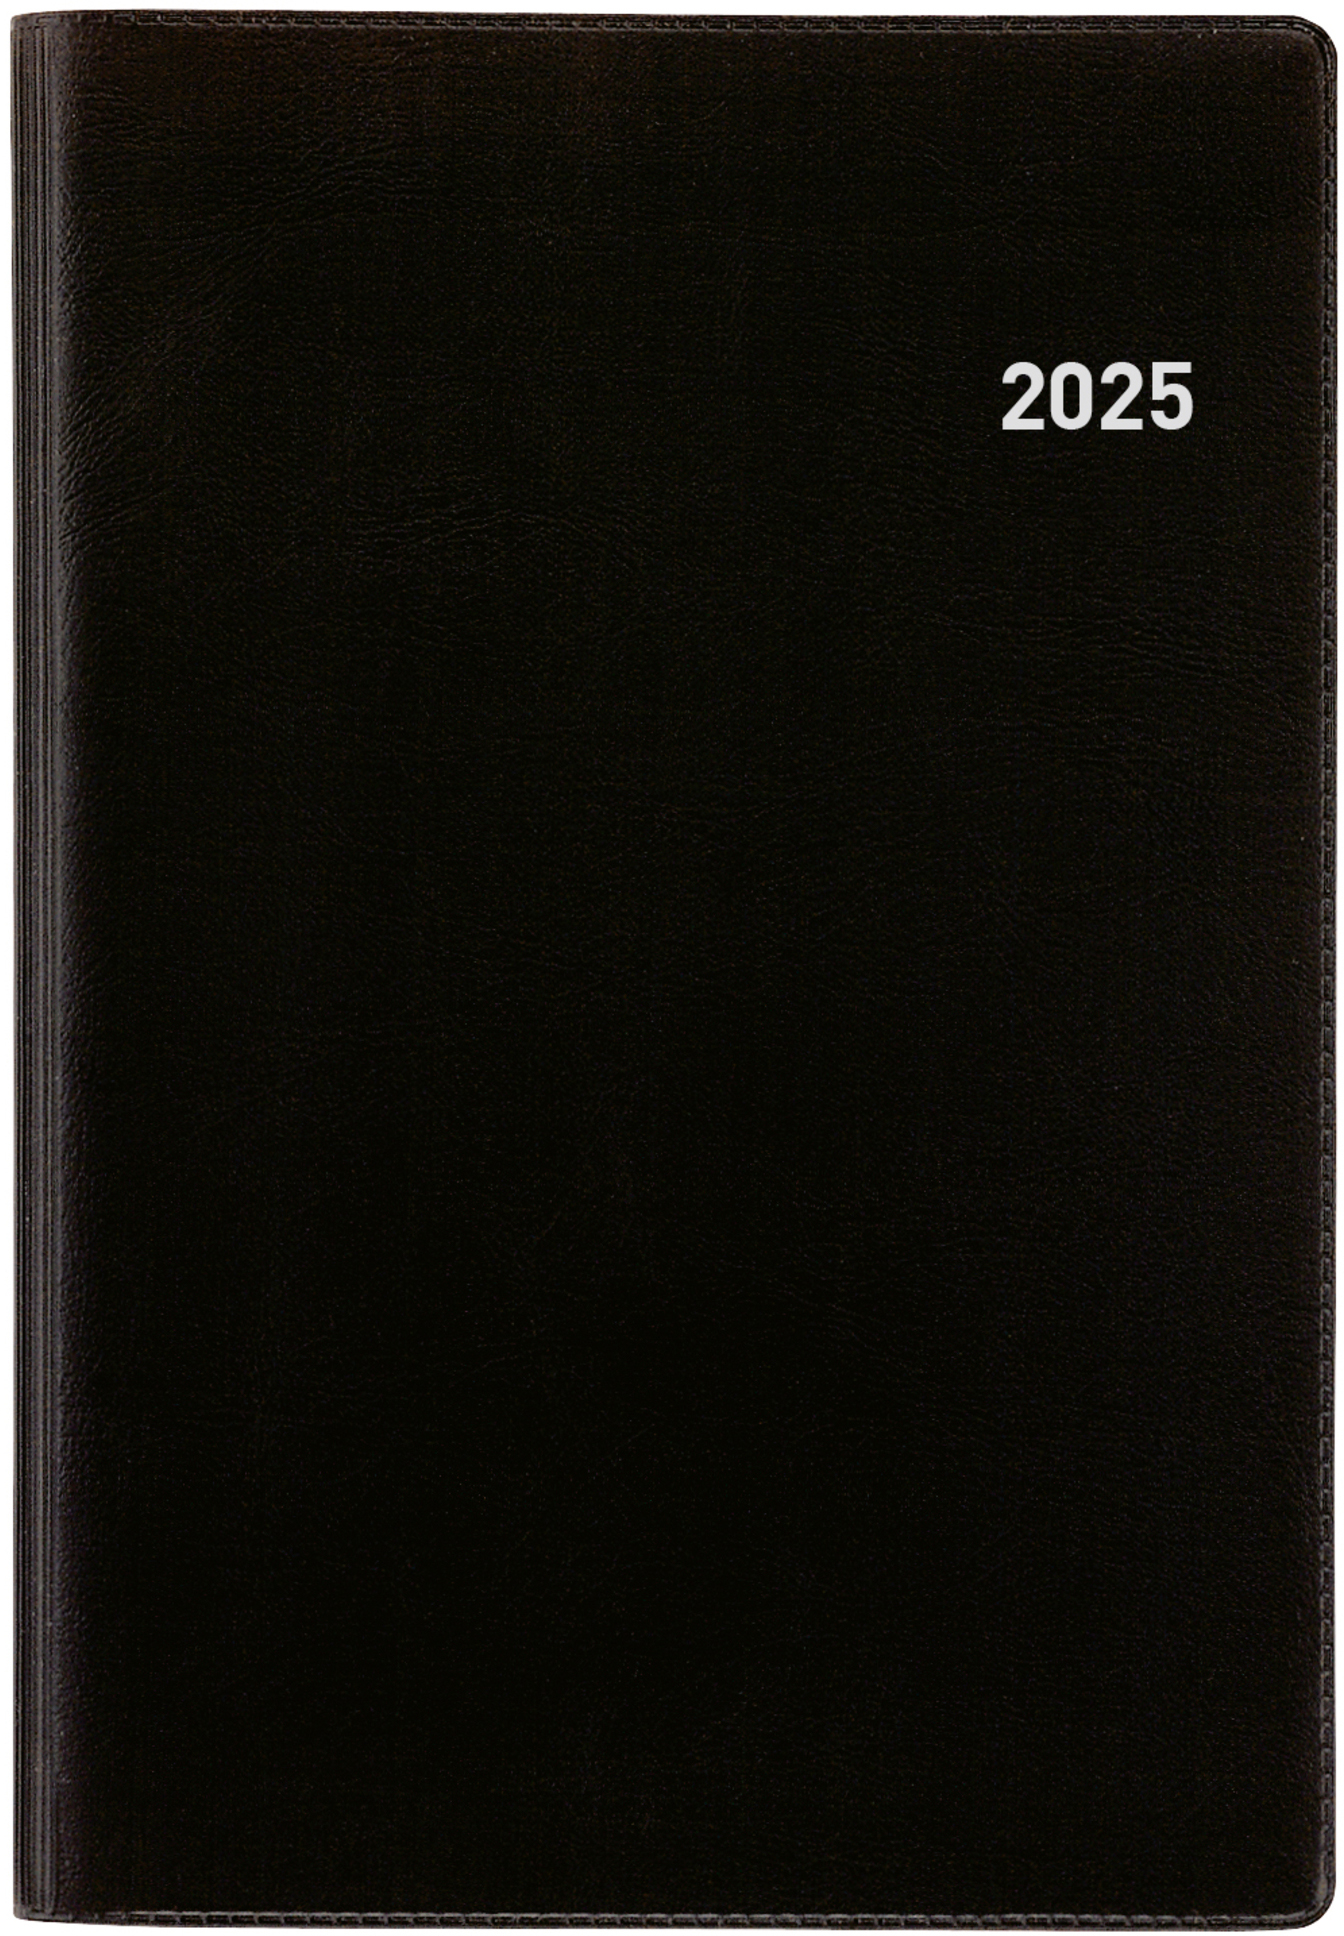 BIELLA Agenda Istanbul 2025 855612020025 1M/2P noir ML 10.6x15.3cm